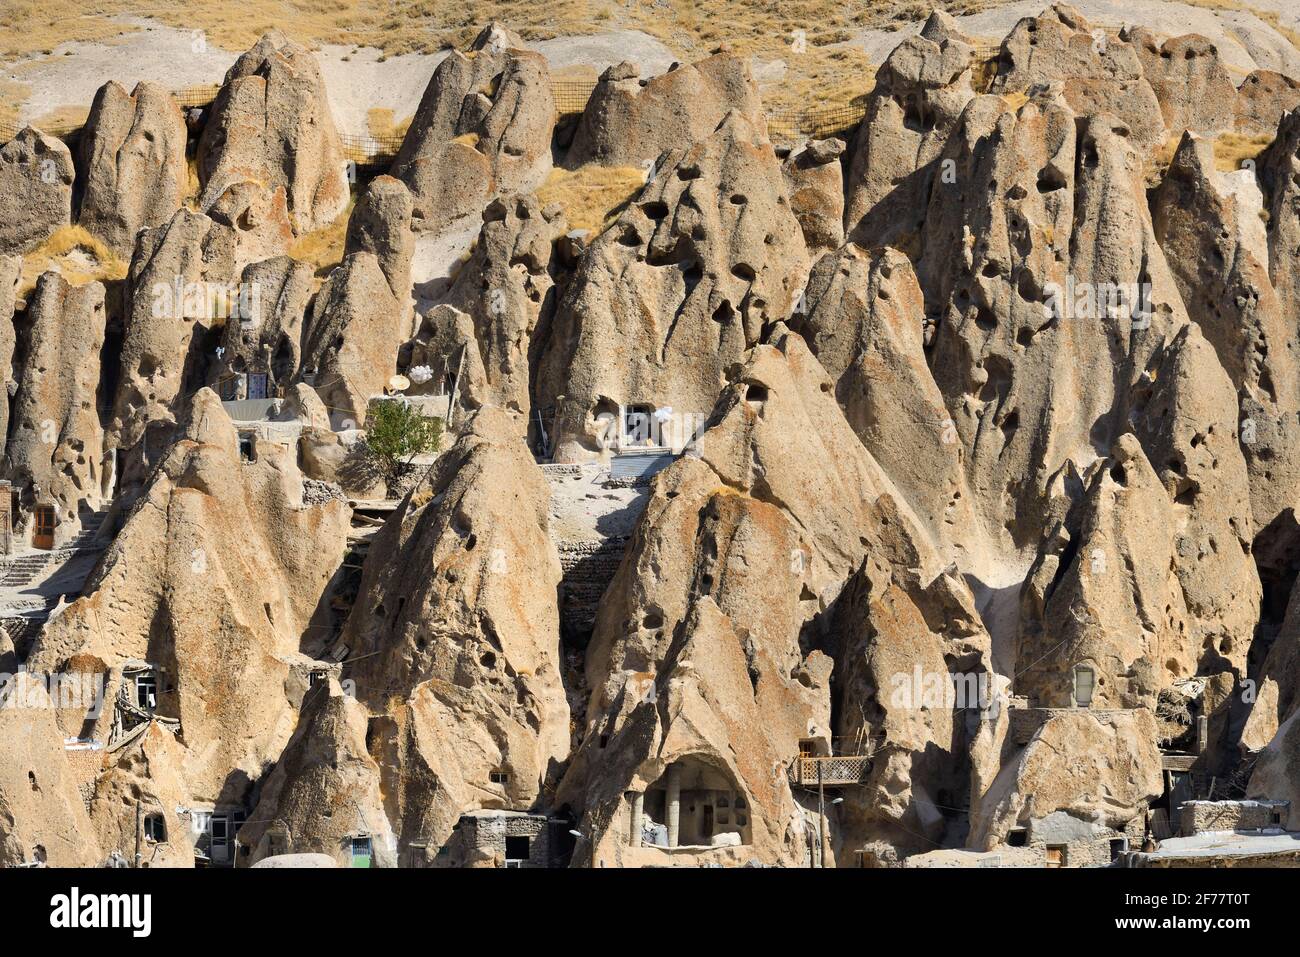 Iran, East Azerbaijan province, Kandovan troglodyte village Stock Photo